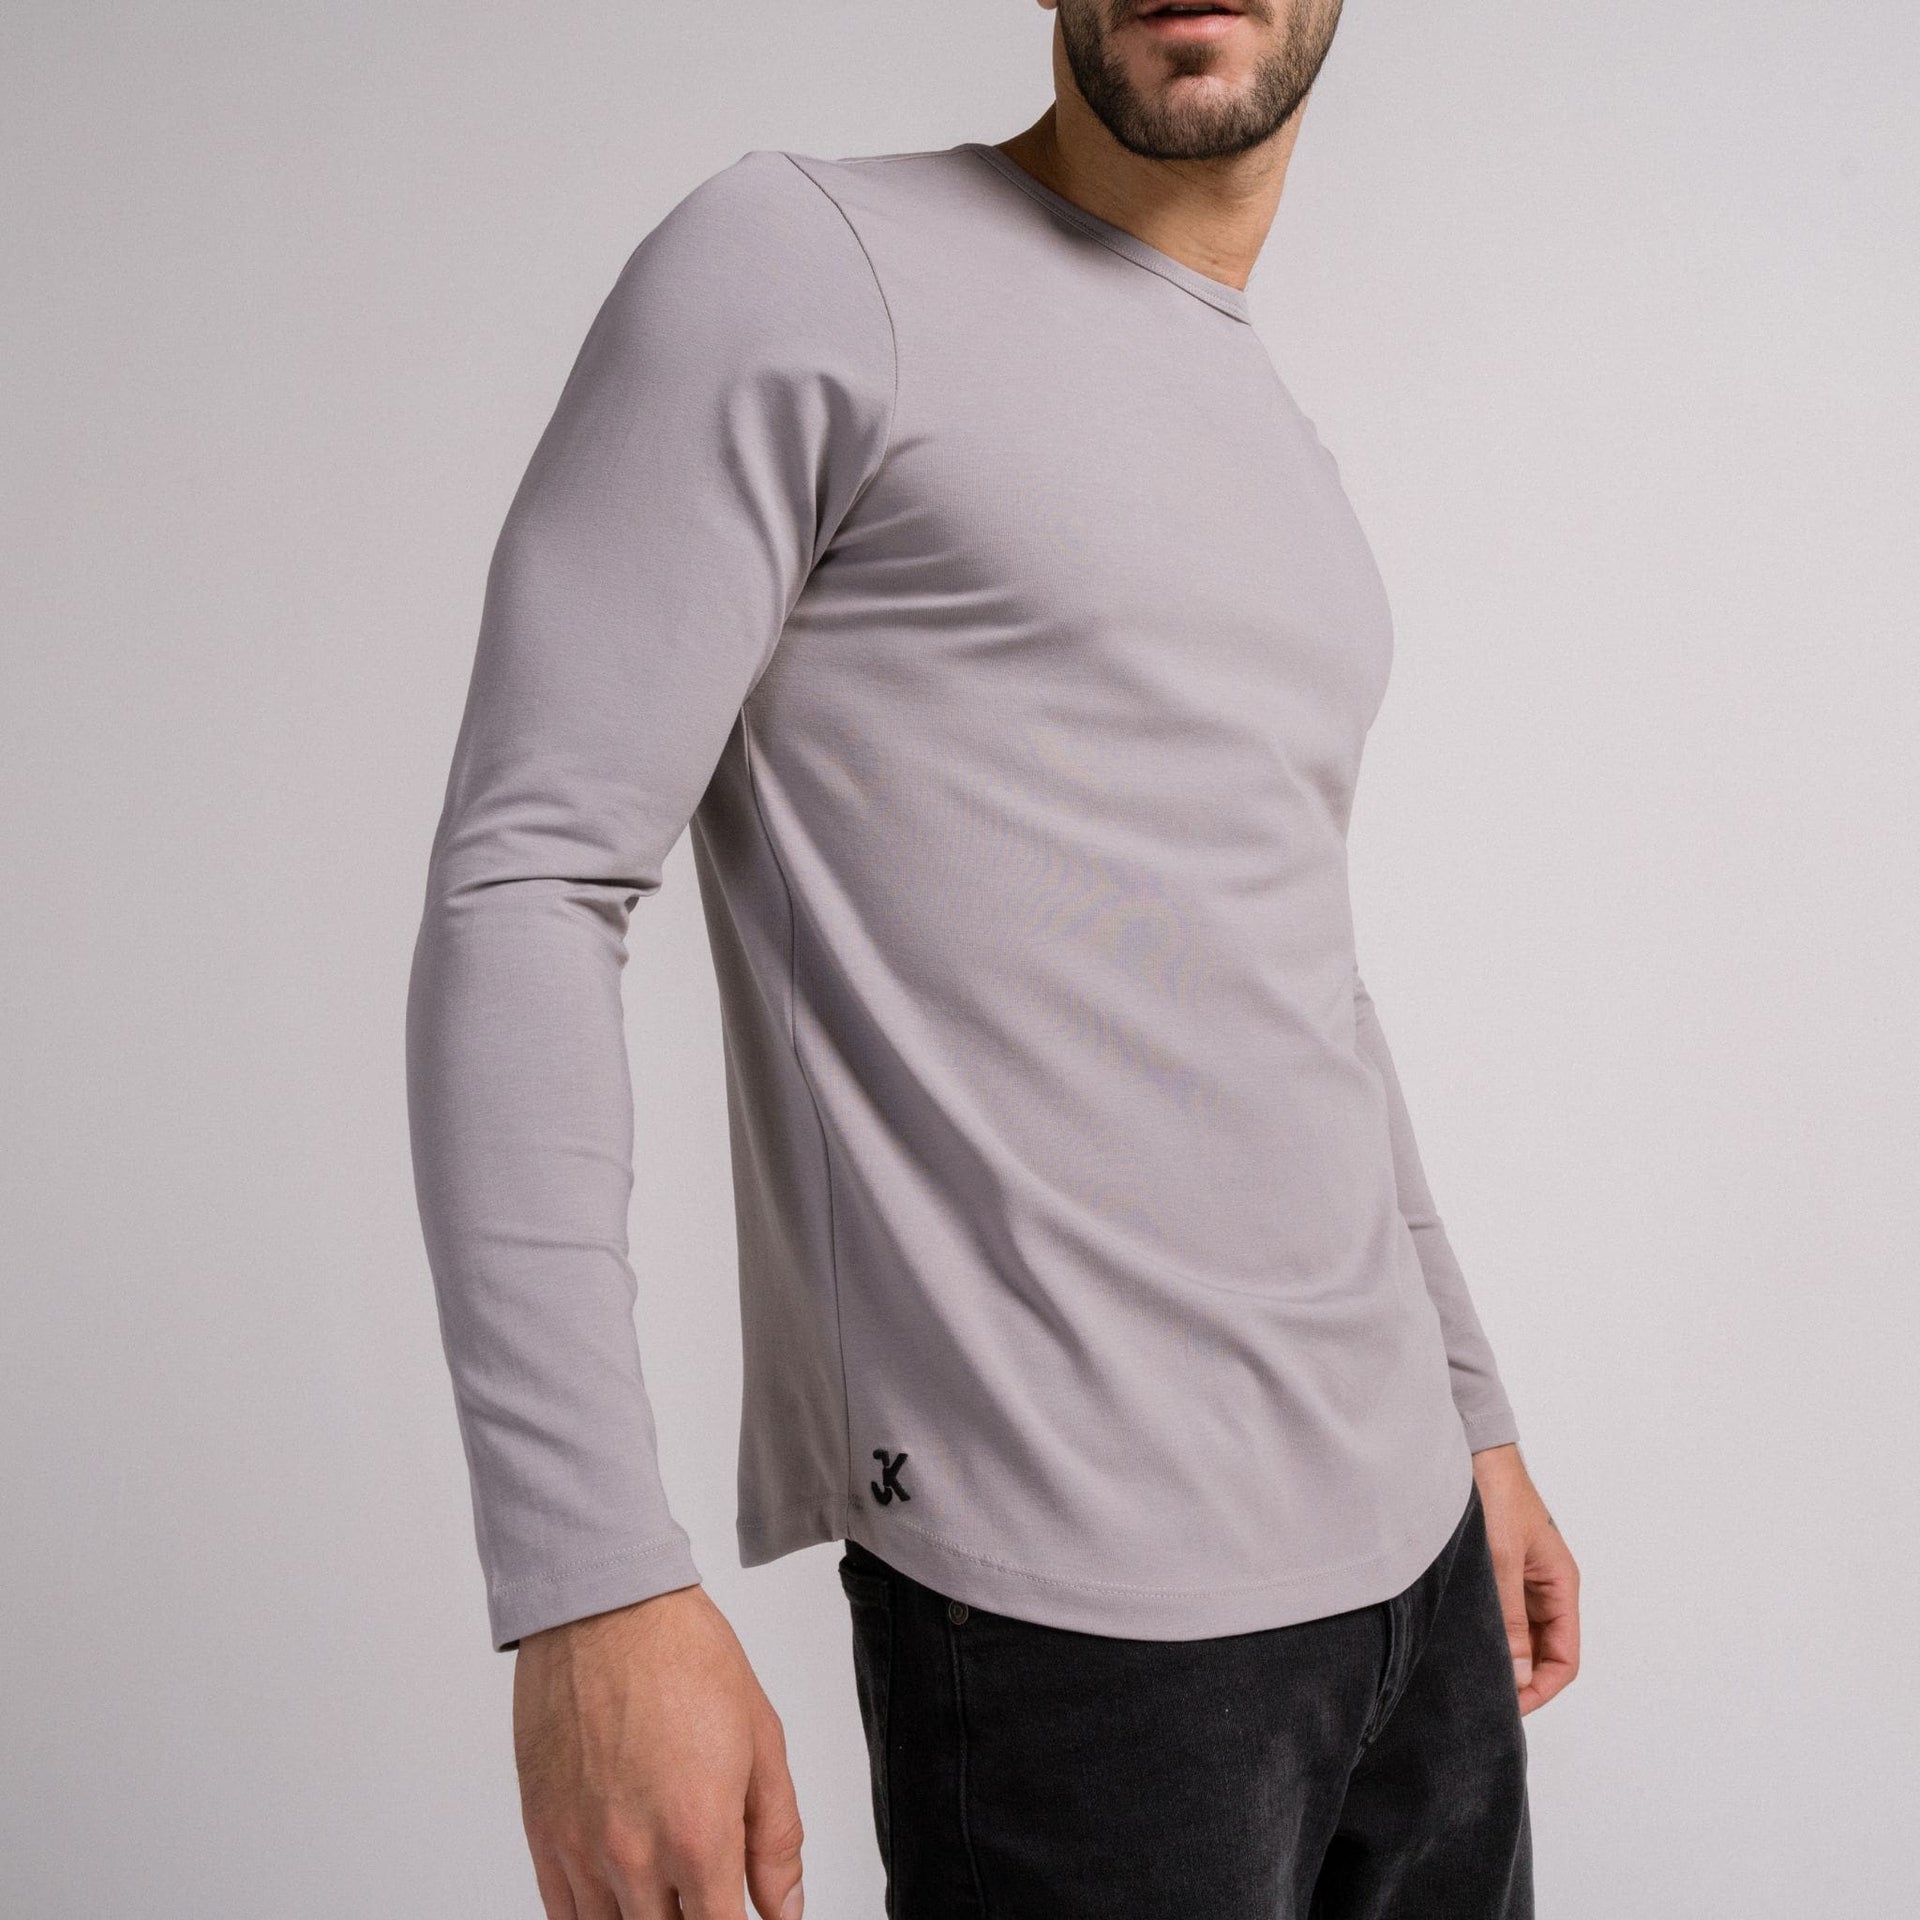 JK Store - Egyptian Cotton T-Shirts | Men’s clothing